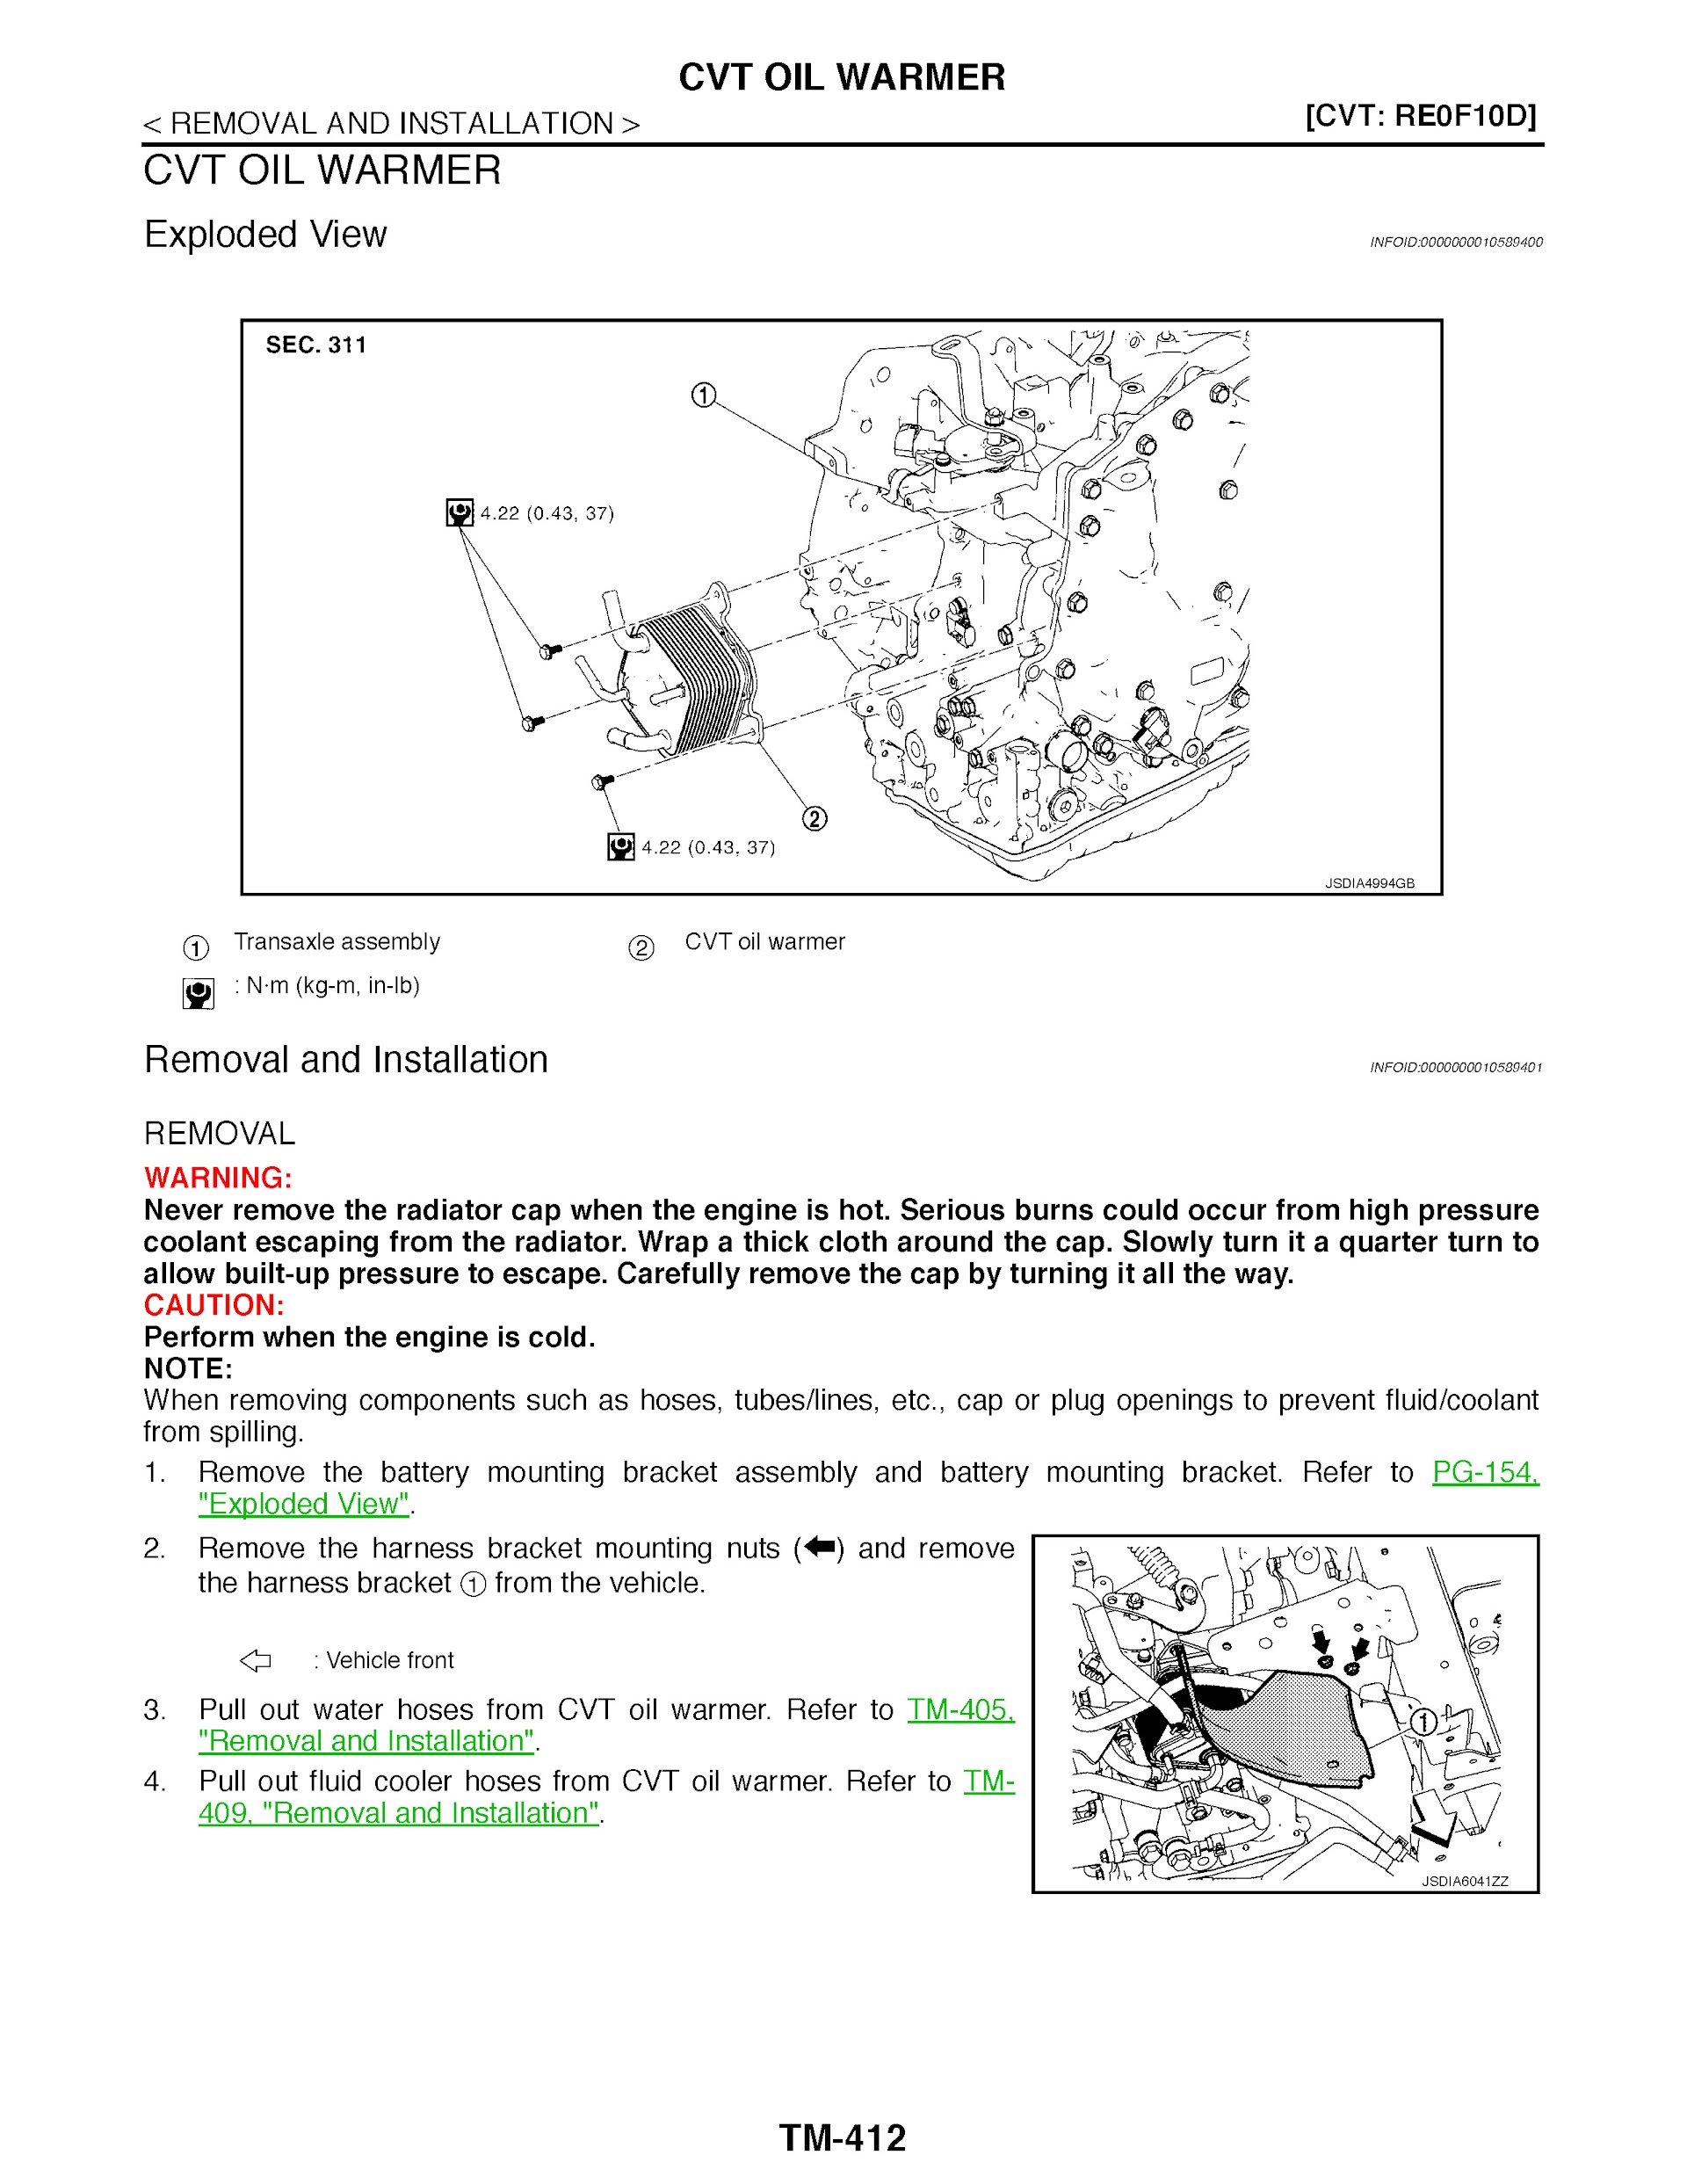 Nissan Qashqai Repair Manual, CVT Oil Warmer Removal and Installation